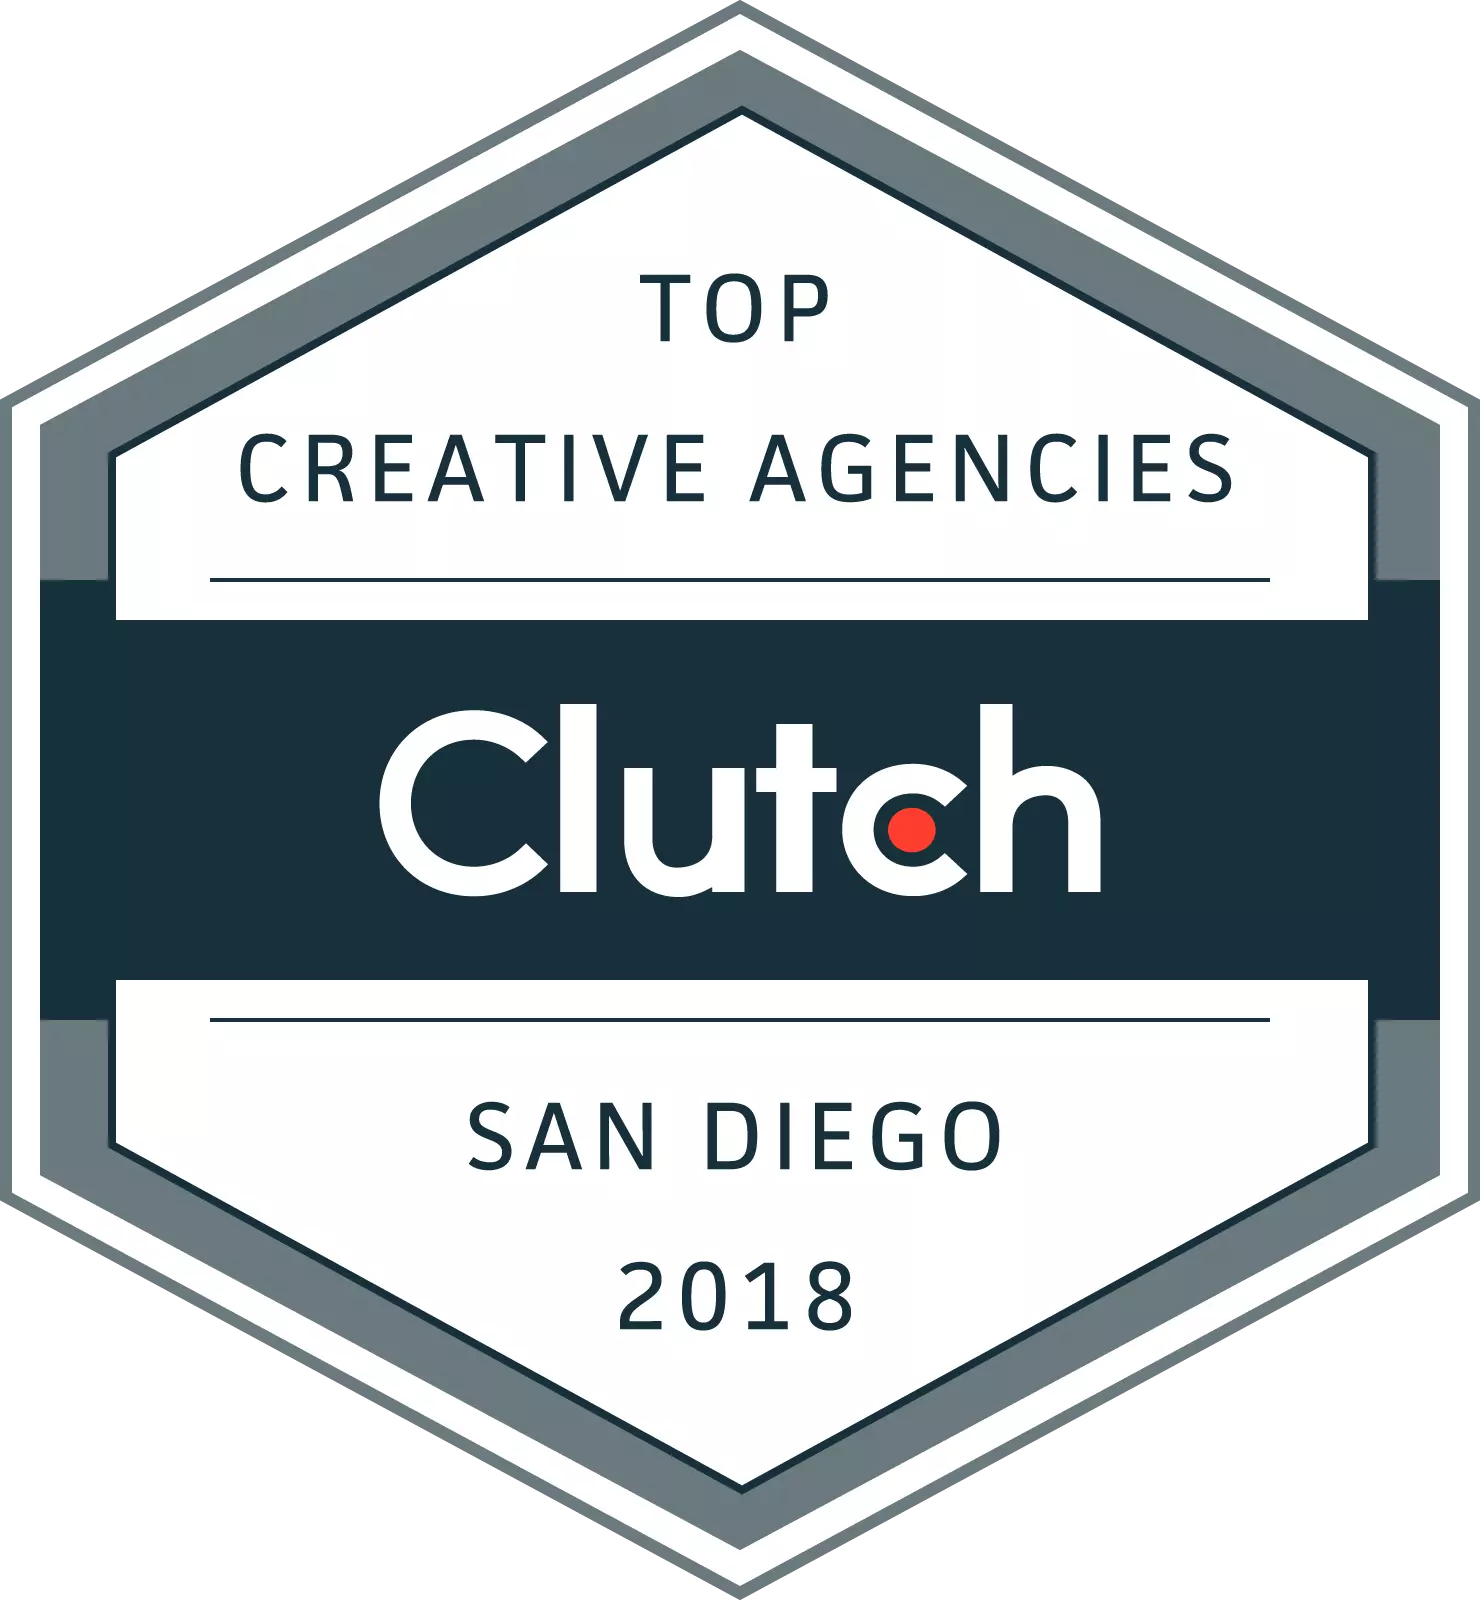 Named Top 10 San Diego Creative Agencies
Named one of the Top 10 Creative Agencies in San Diego by Clutch.co
etc